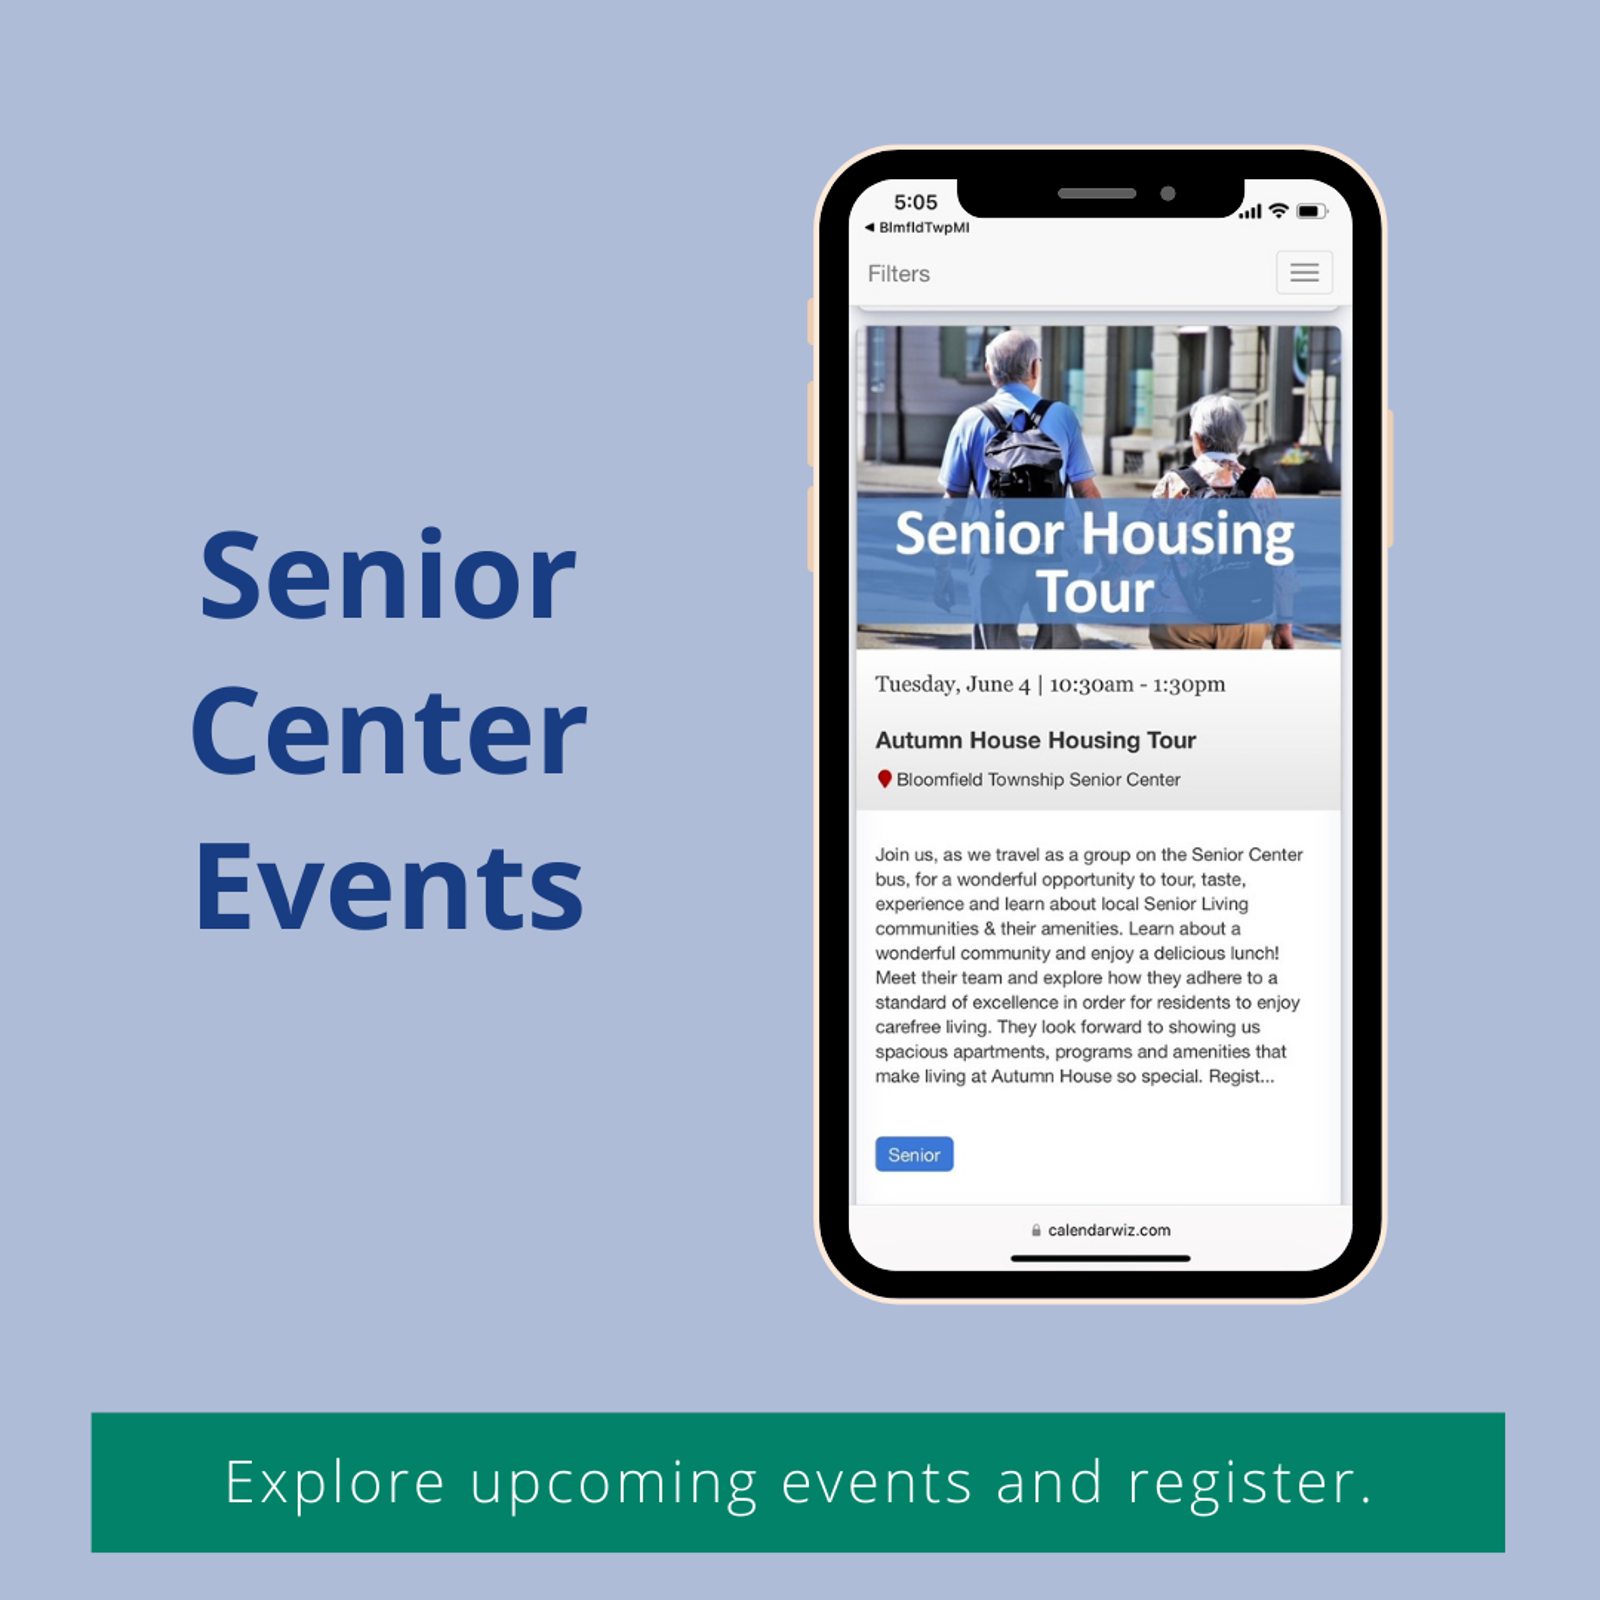 Senior Center Events